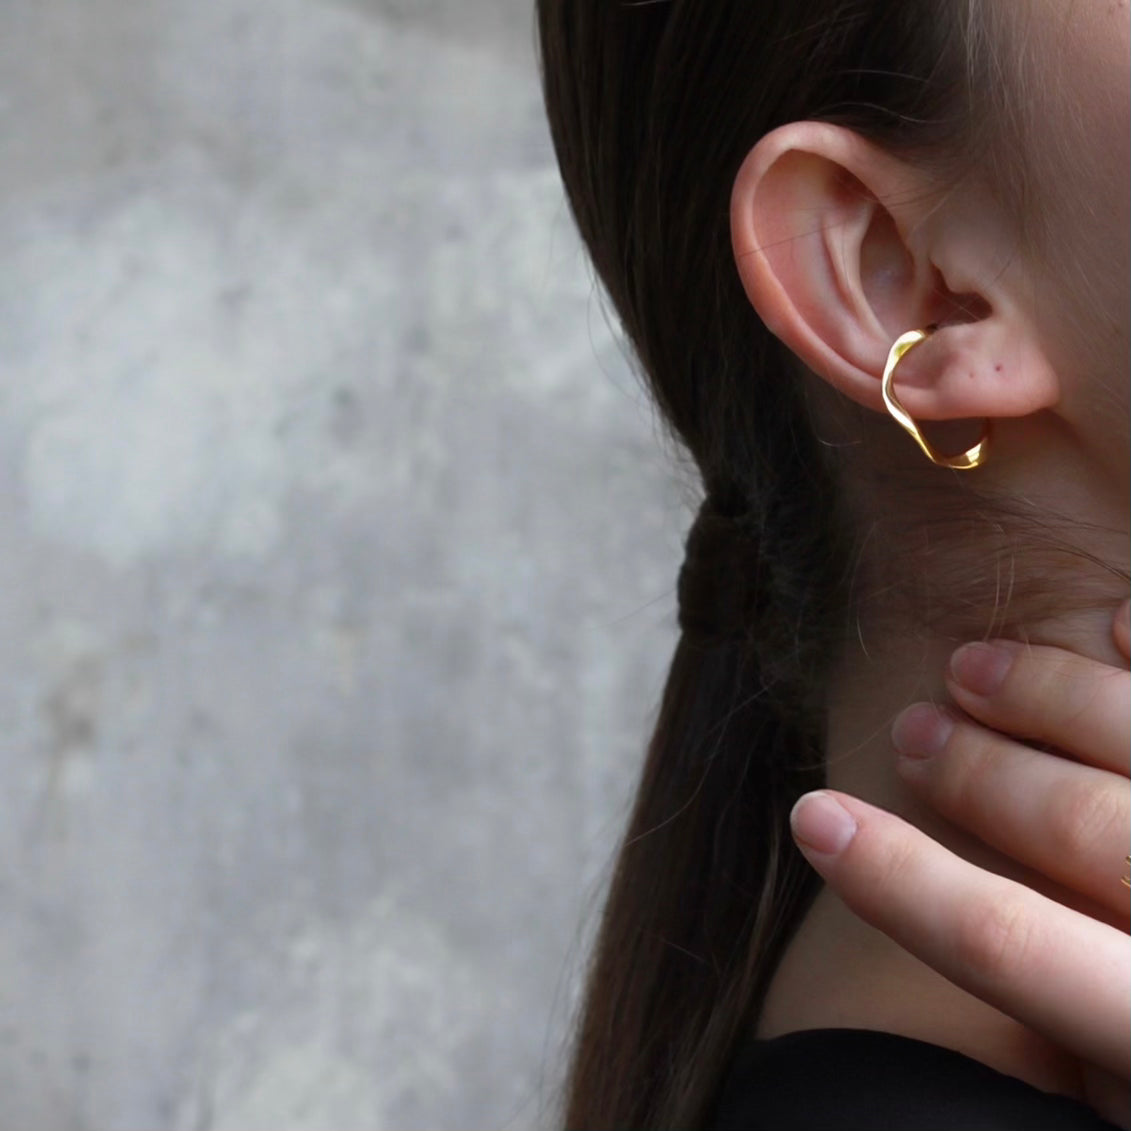 Golden Möbius strip Ear Cuff/ Ring